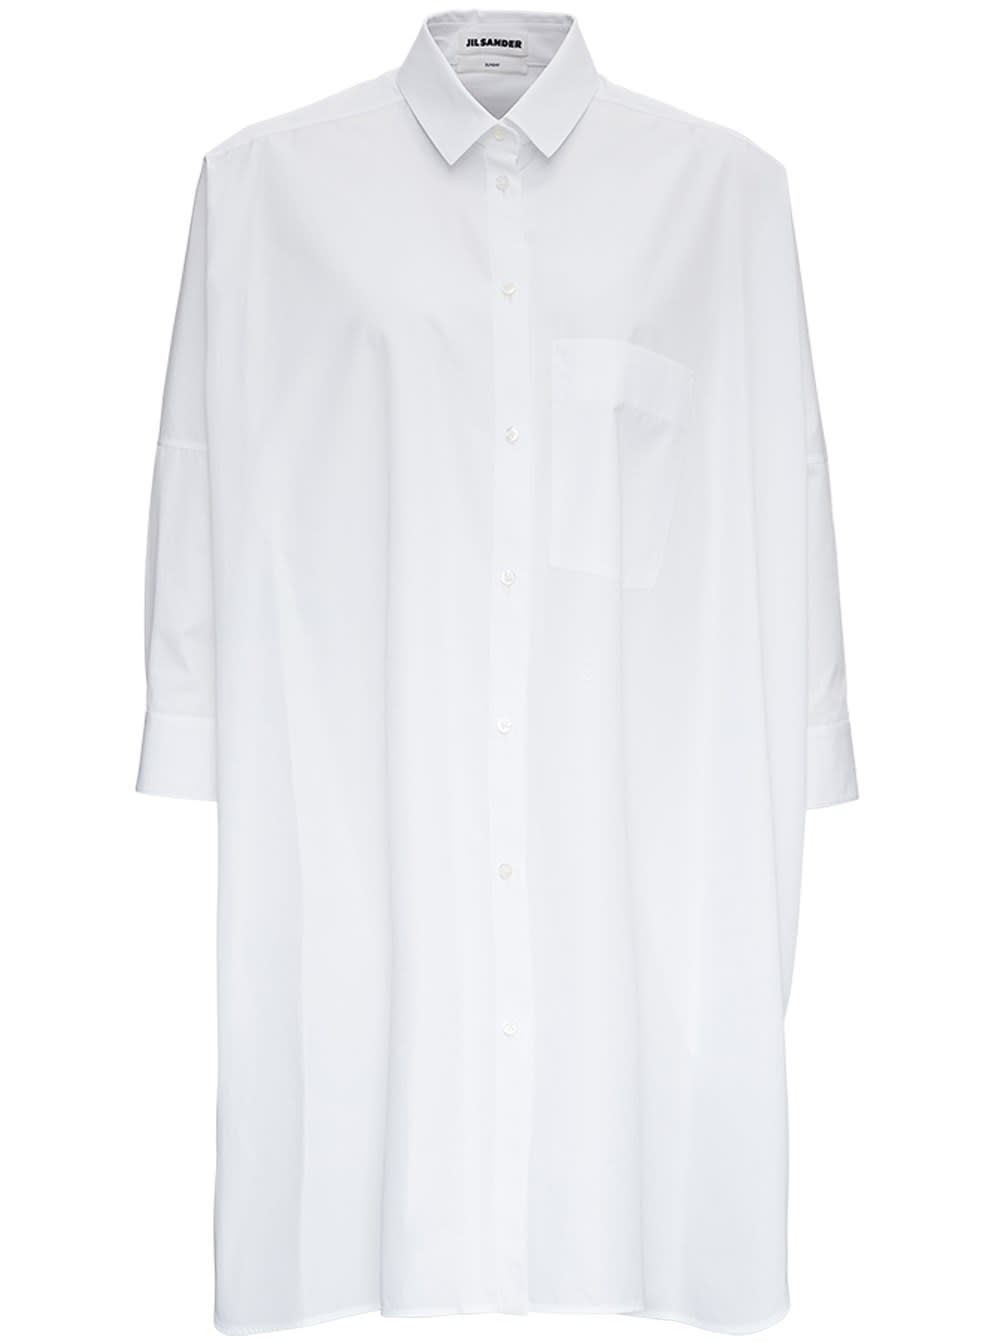 Jil Sander Oversize Cotton Poplin Shirt